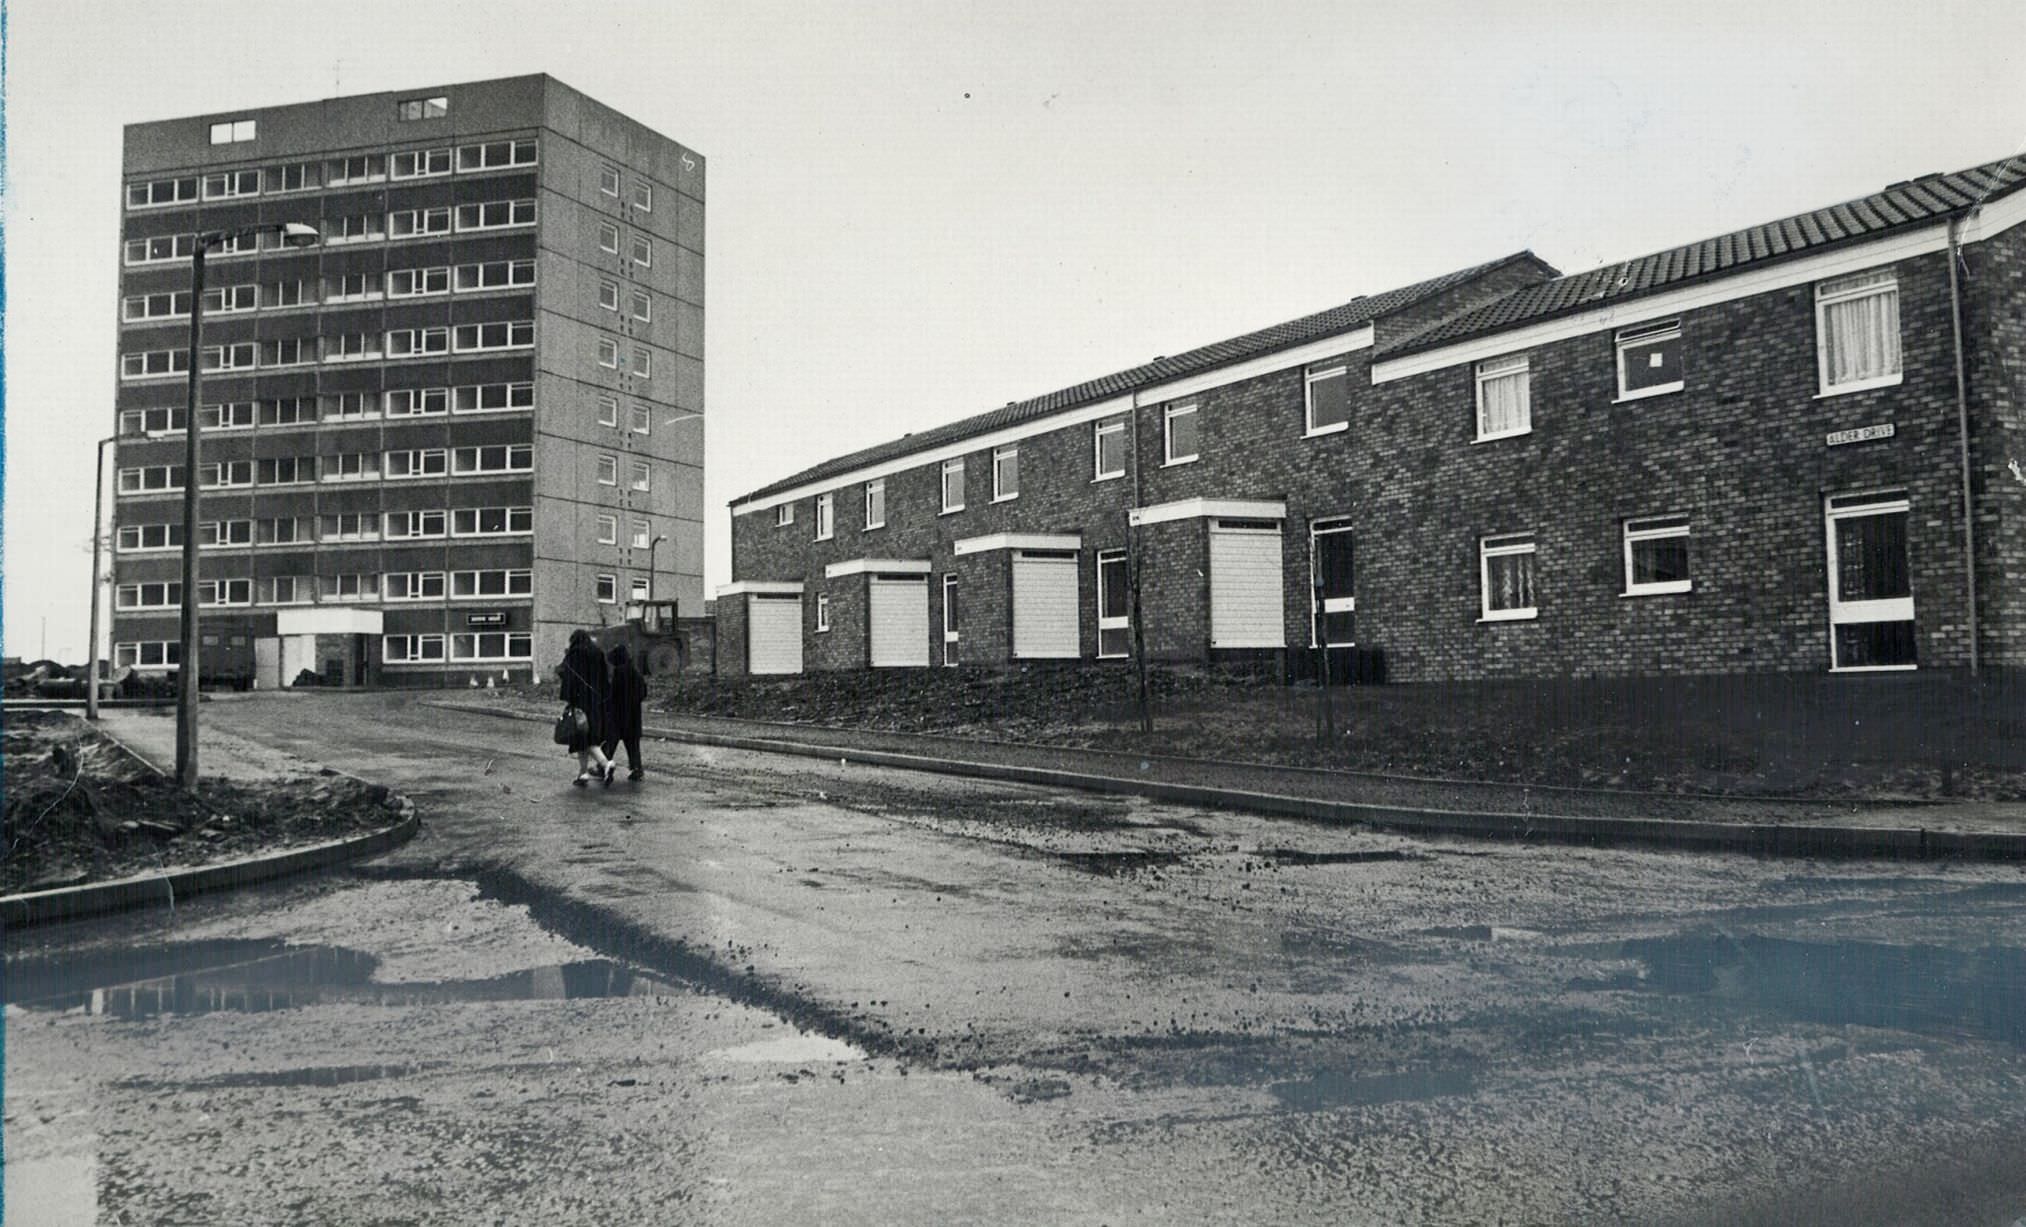 Chelmsley Wood housing in 1969.